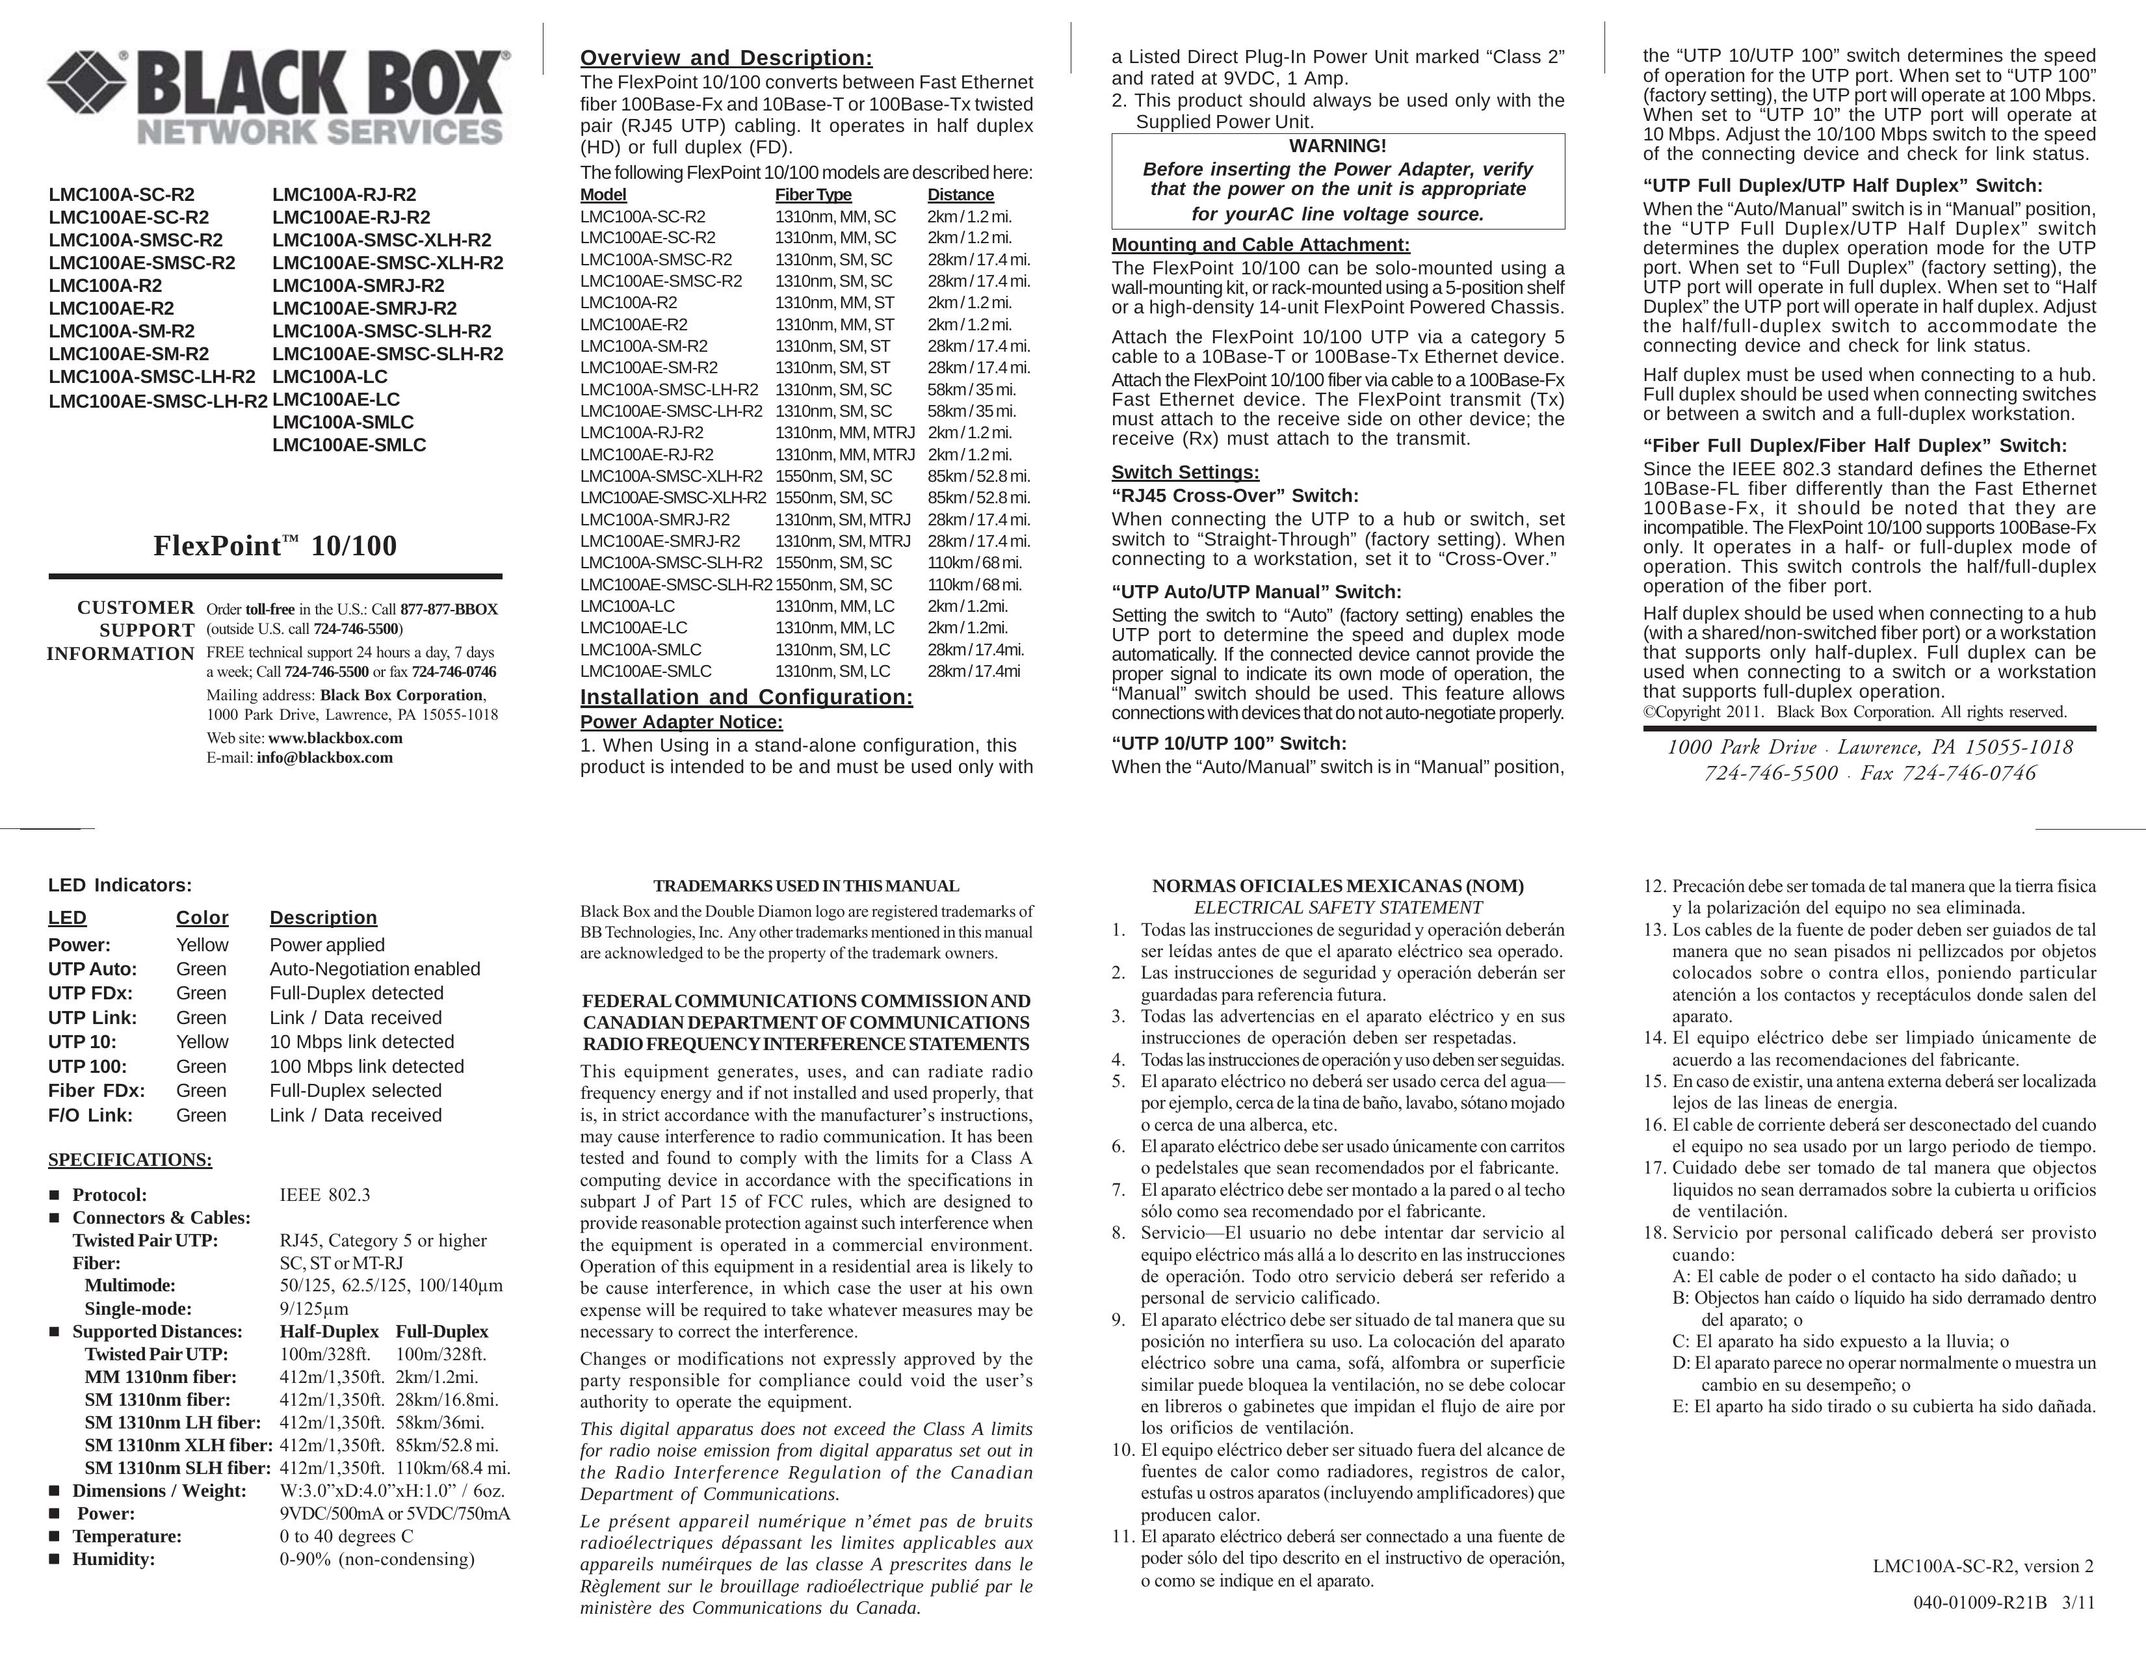 Black Box LMC100AE-SC-R2 Network Cables User Manual